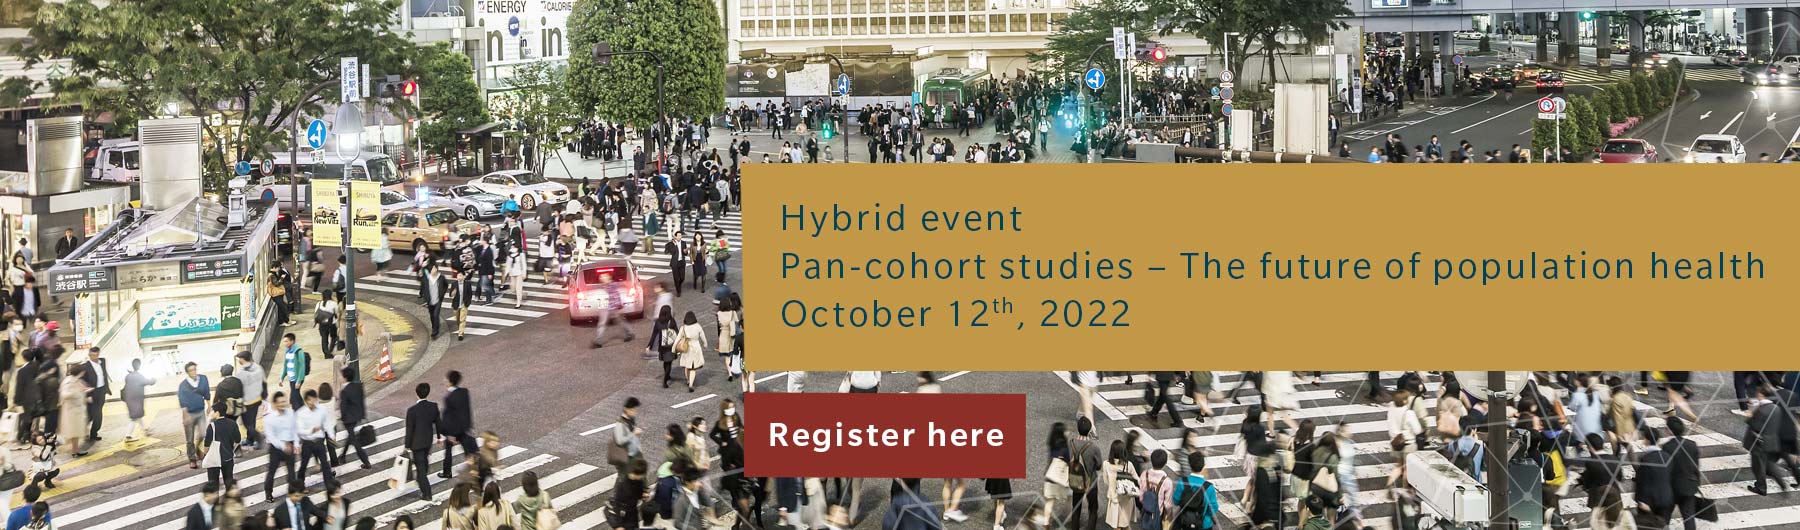 biocrates hybrid event pan cohort studies